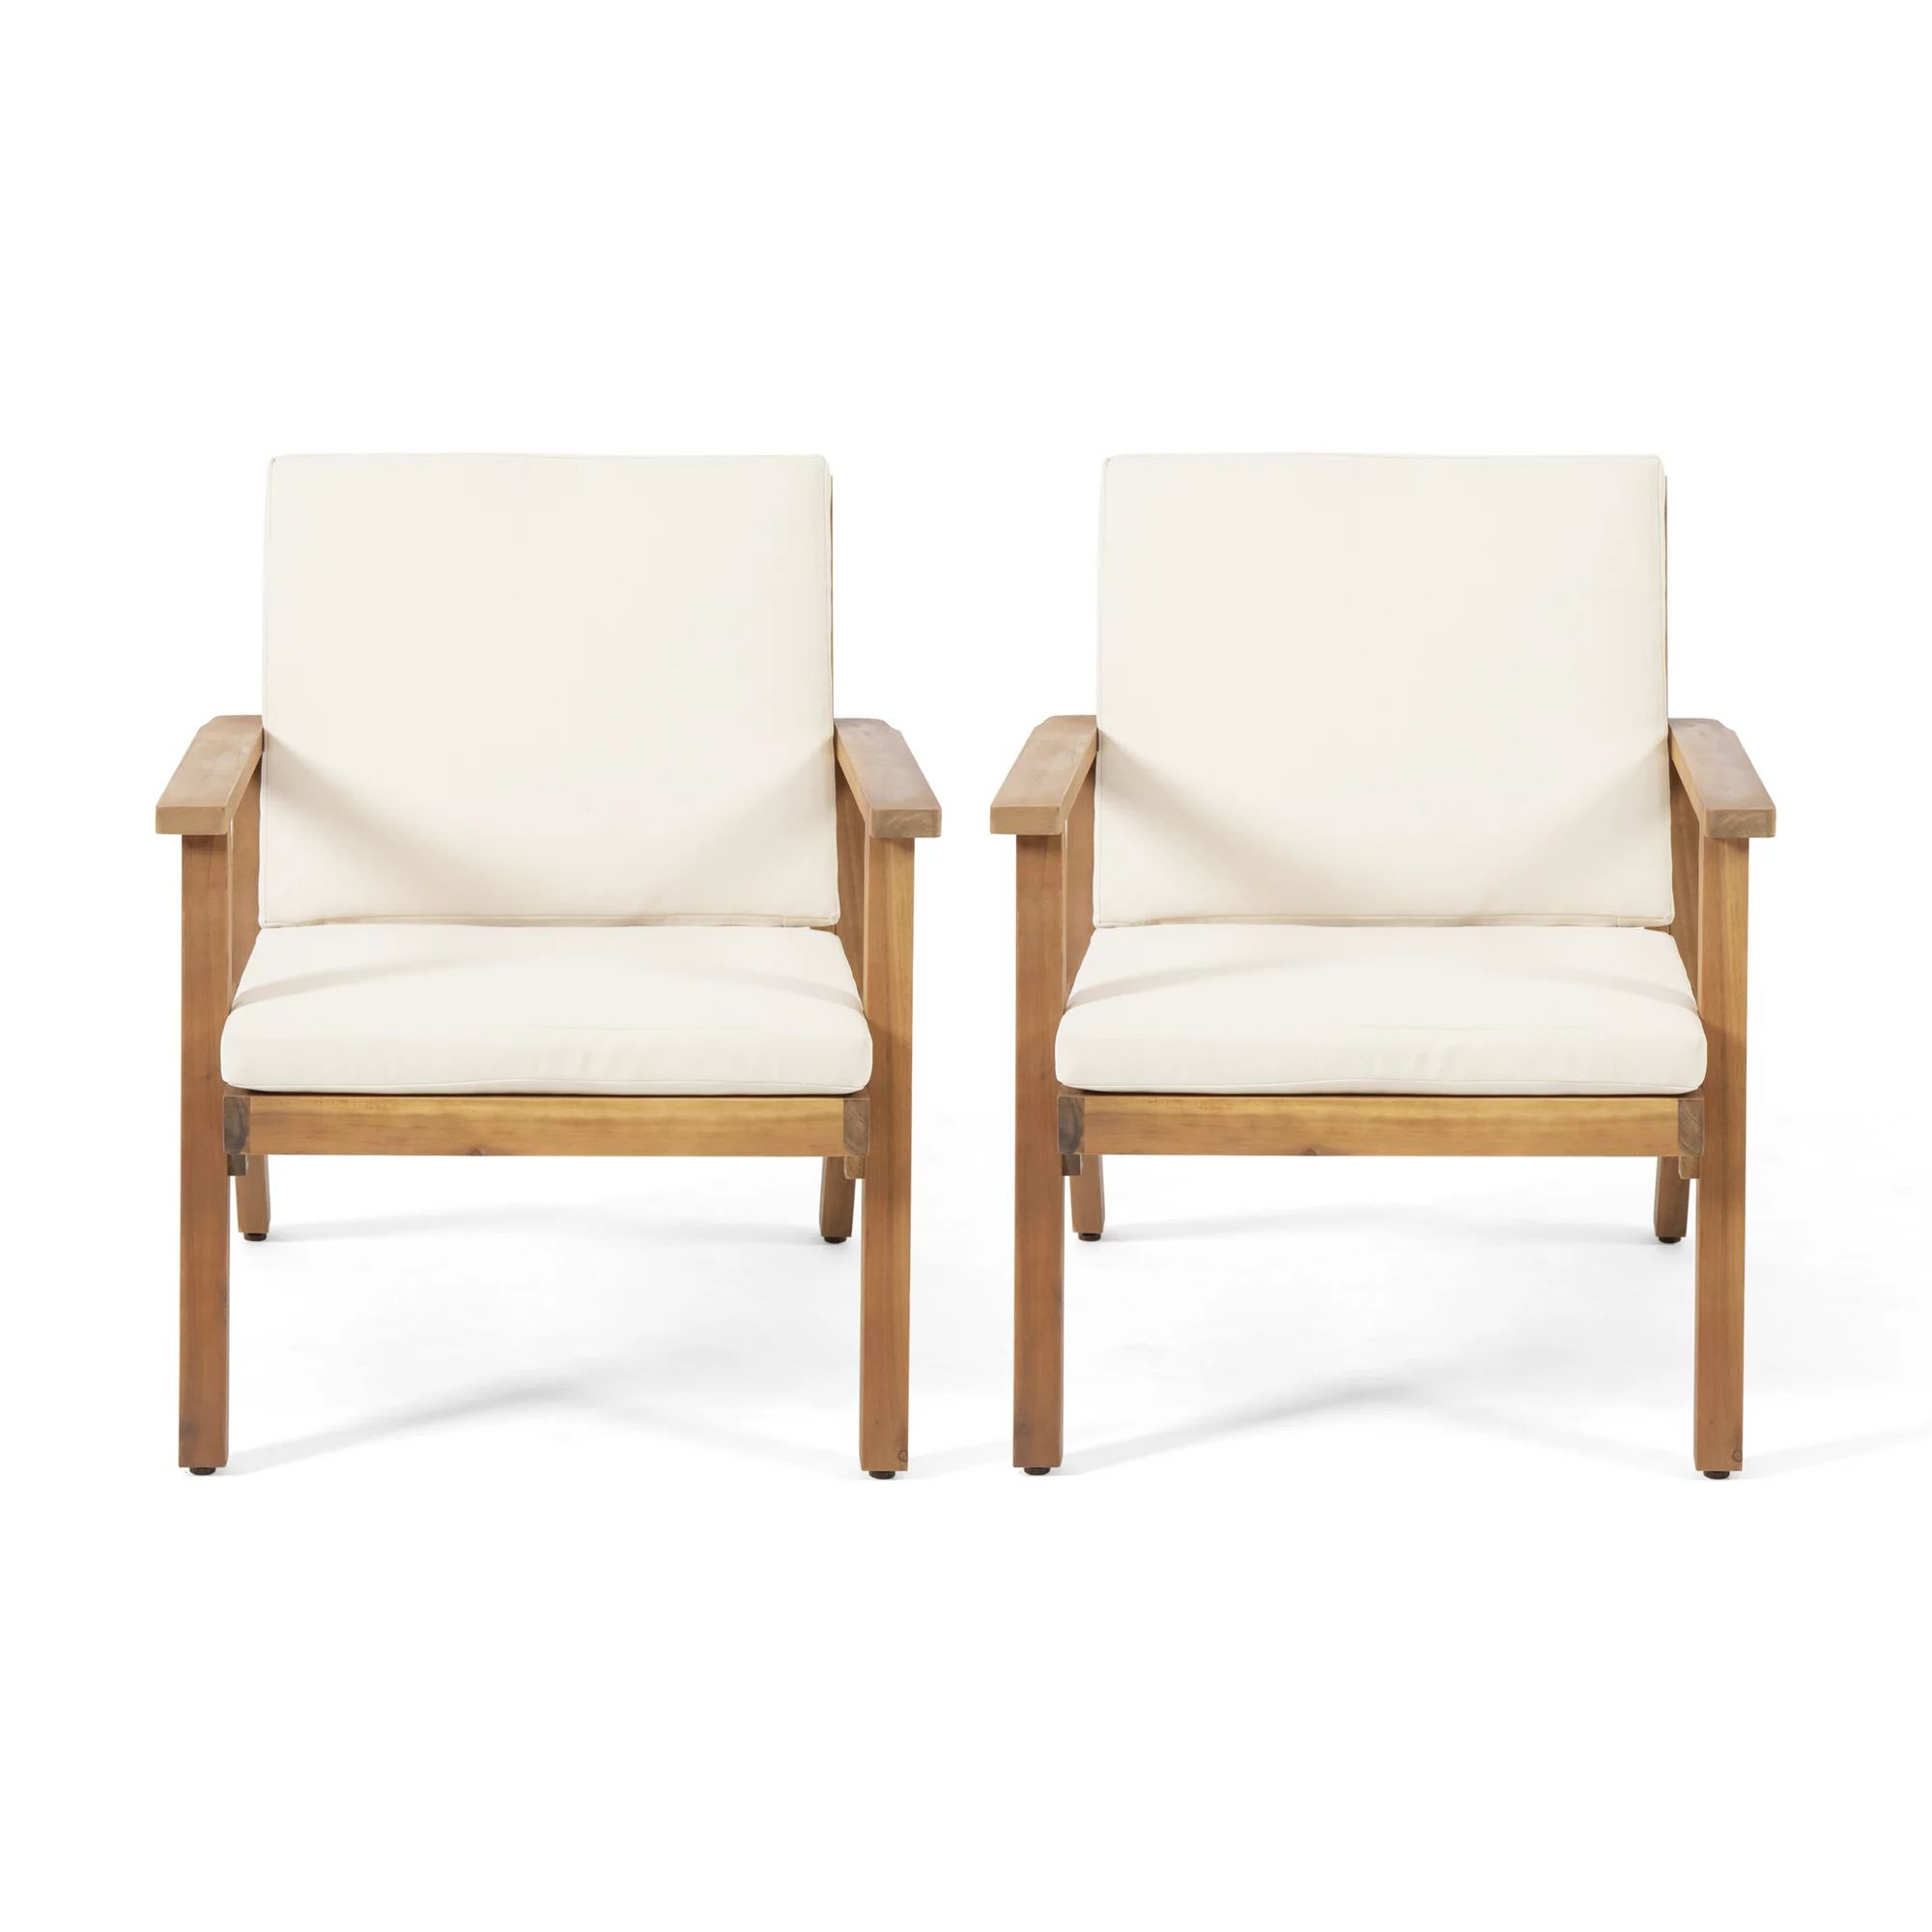 Avacyn Outdoor Acacia Wood Club Chairs with Cushions, Set of 2, Brown Patina and Cream - Walmart.... | Walmart (US)